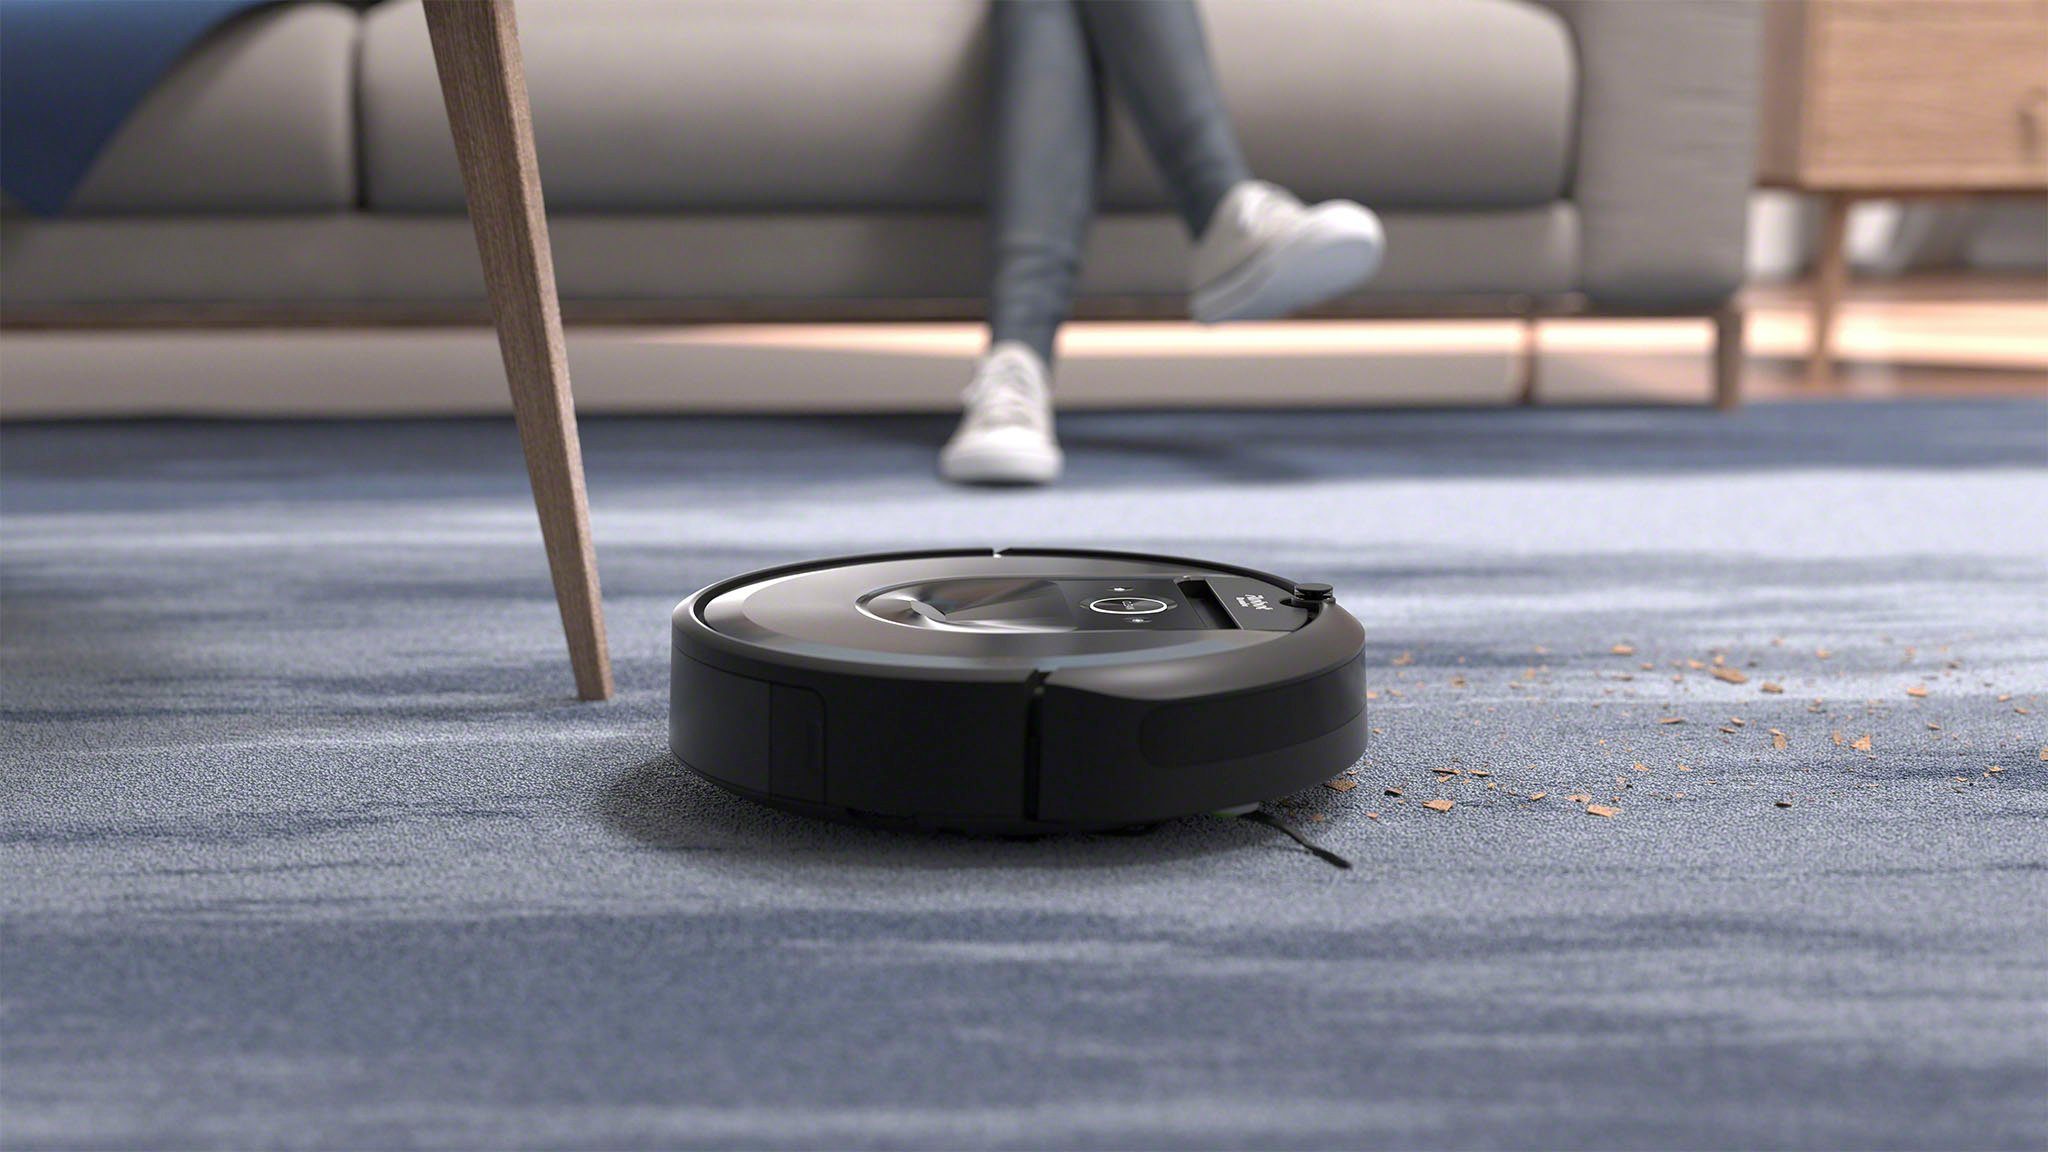 iRobot Saugroboter Roomba Combo Wischroboter i8 (i817840); Saug-und